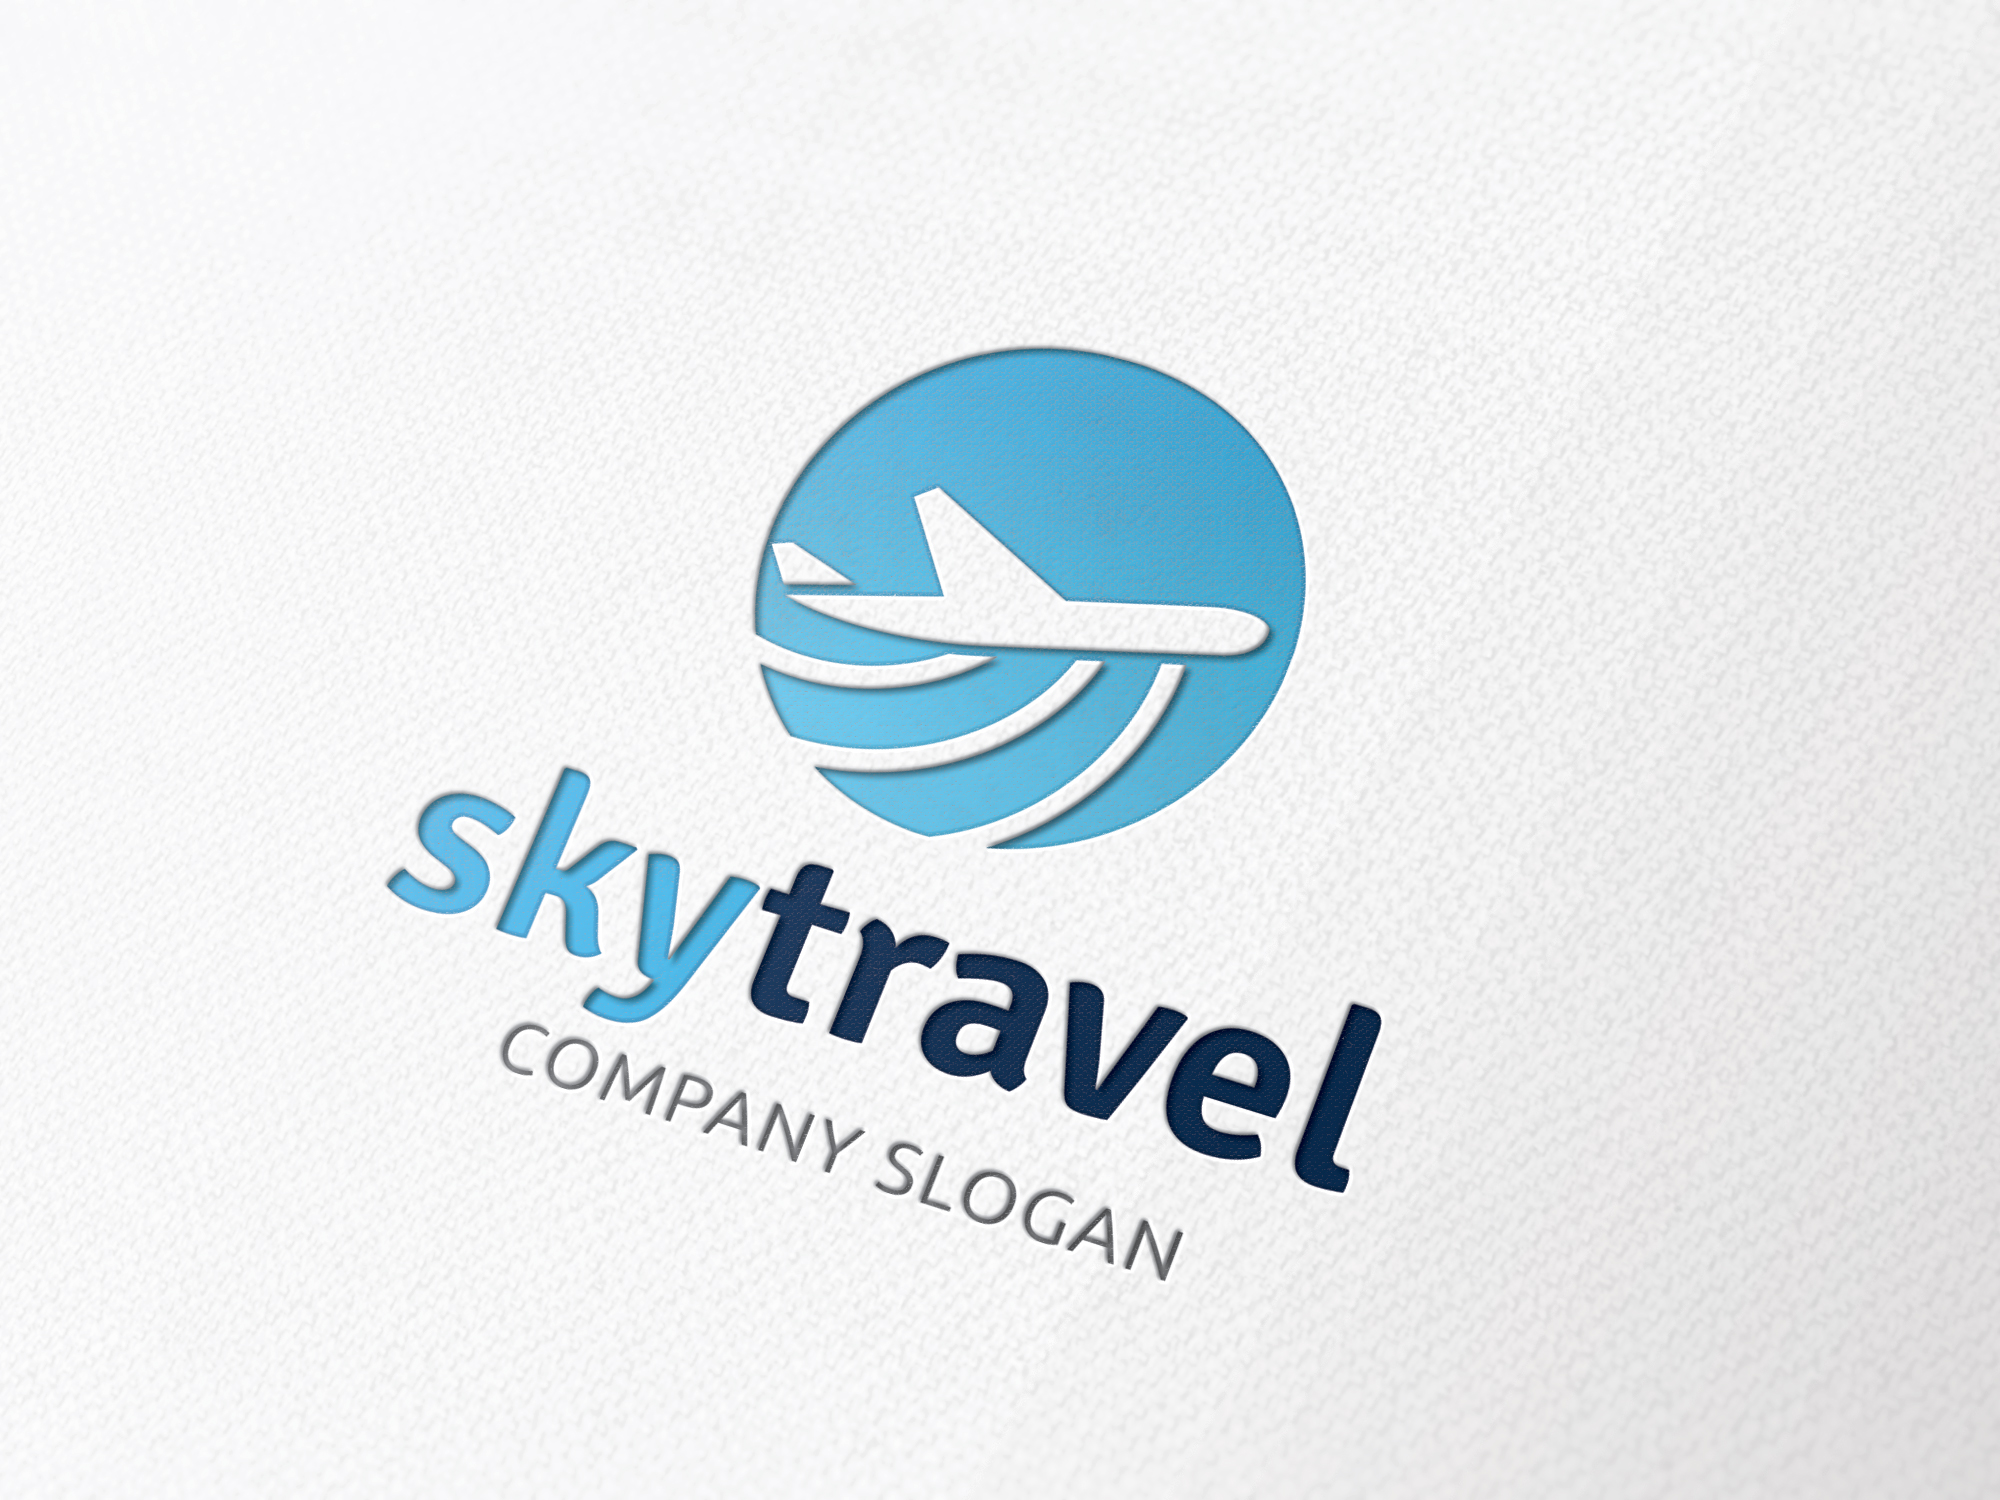 sky travel website